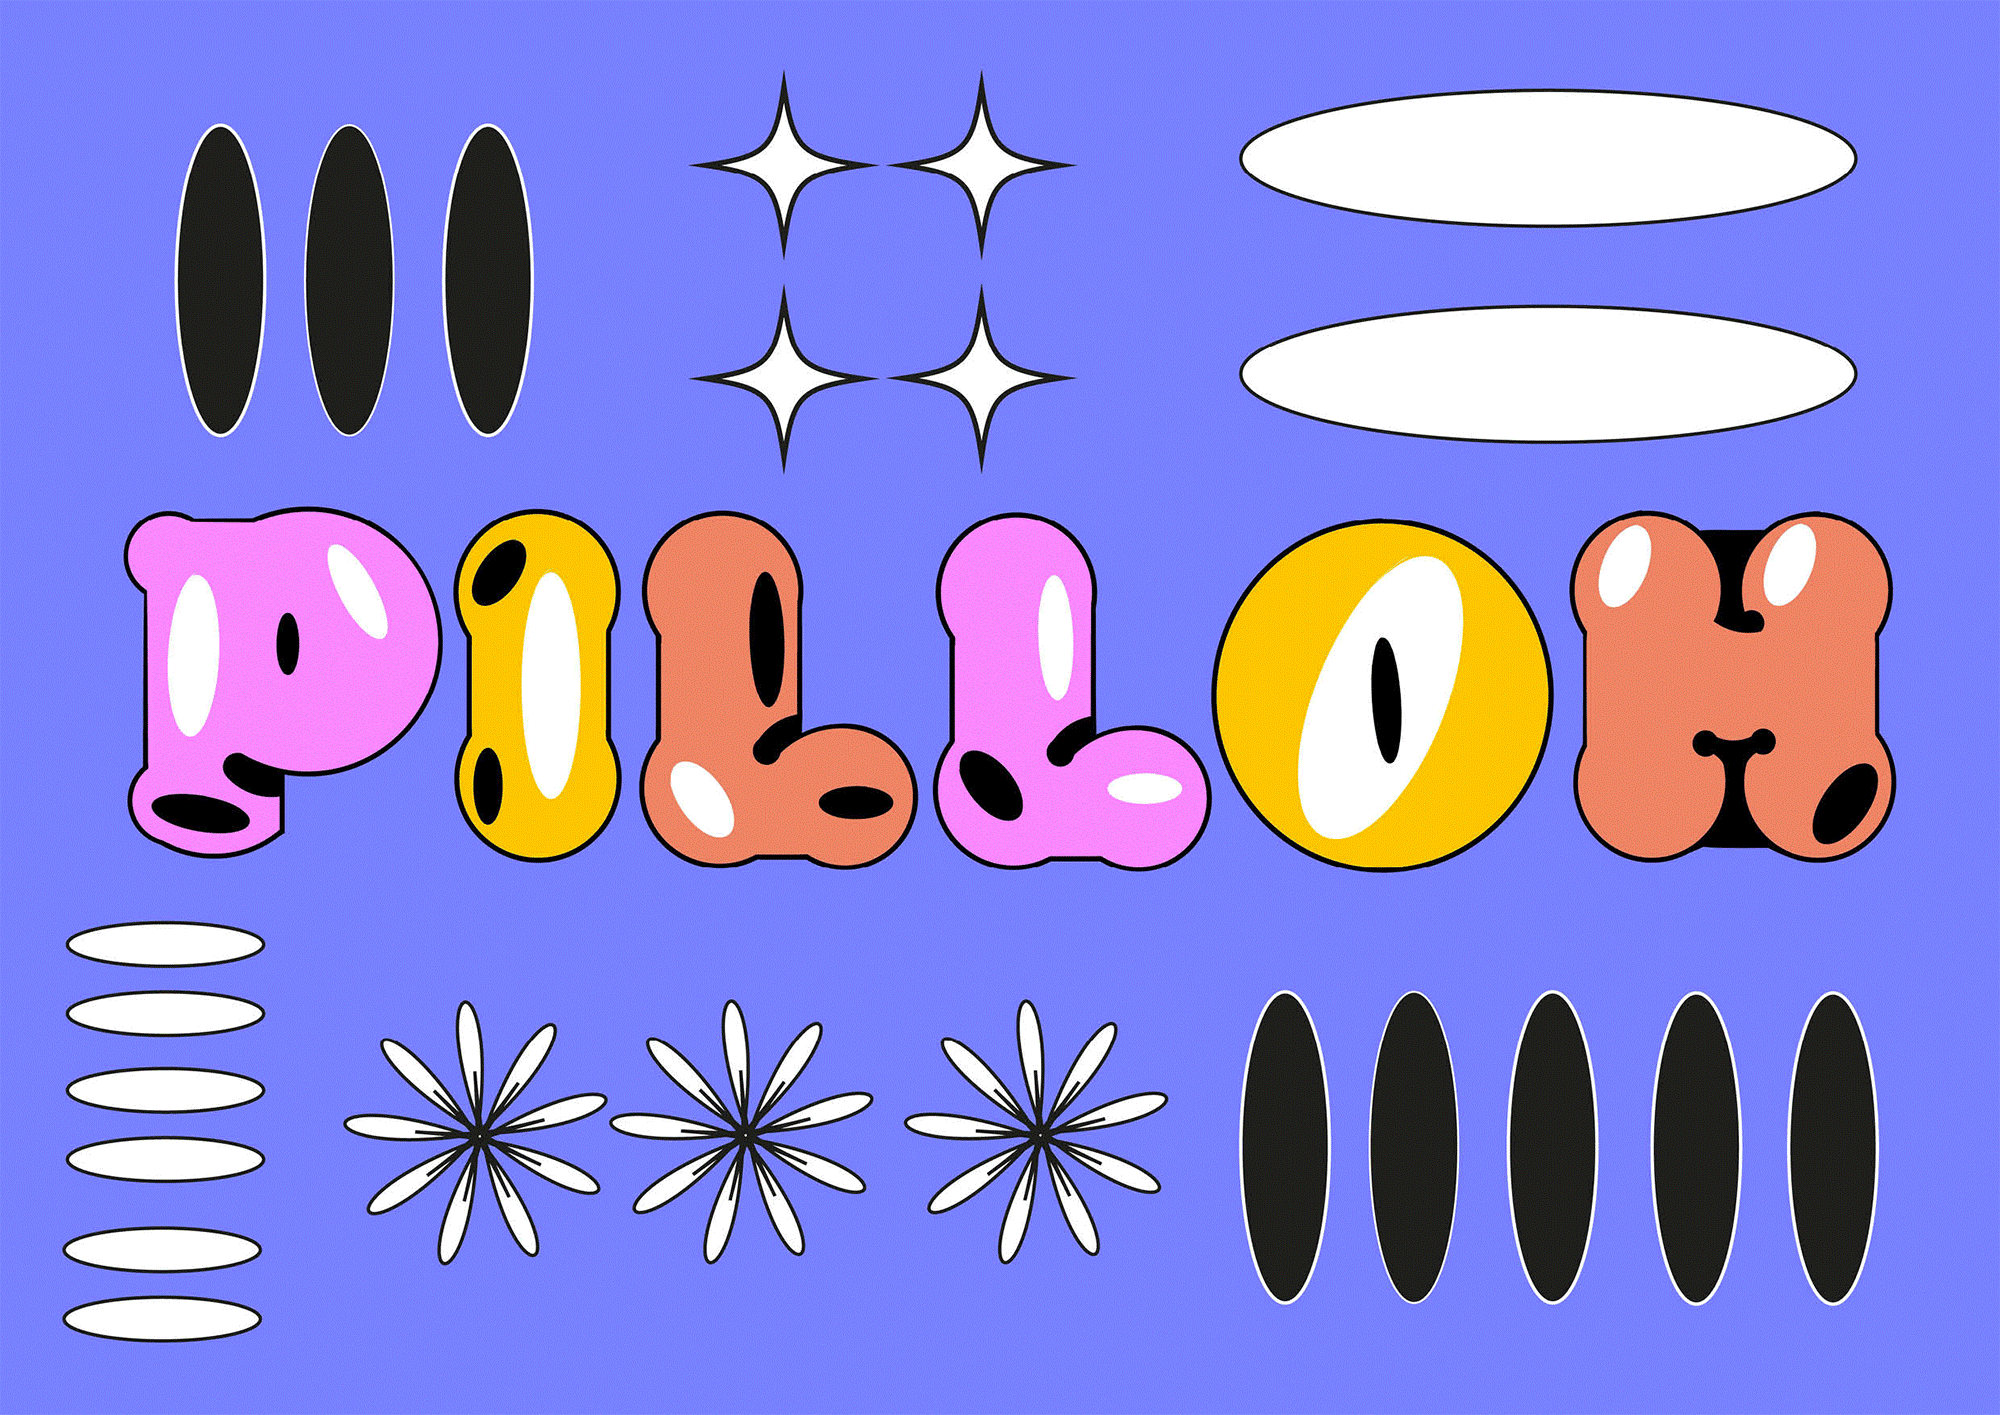 'PILLOH'; Typeface